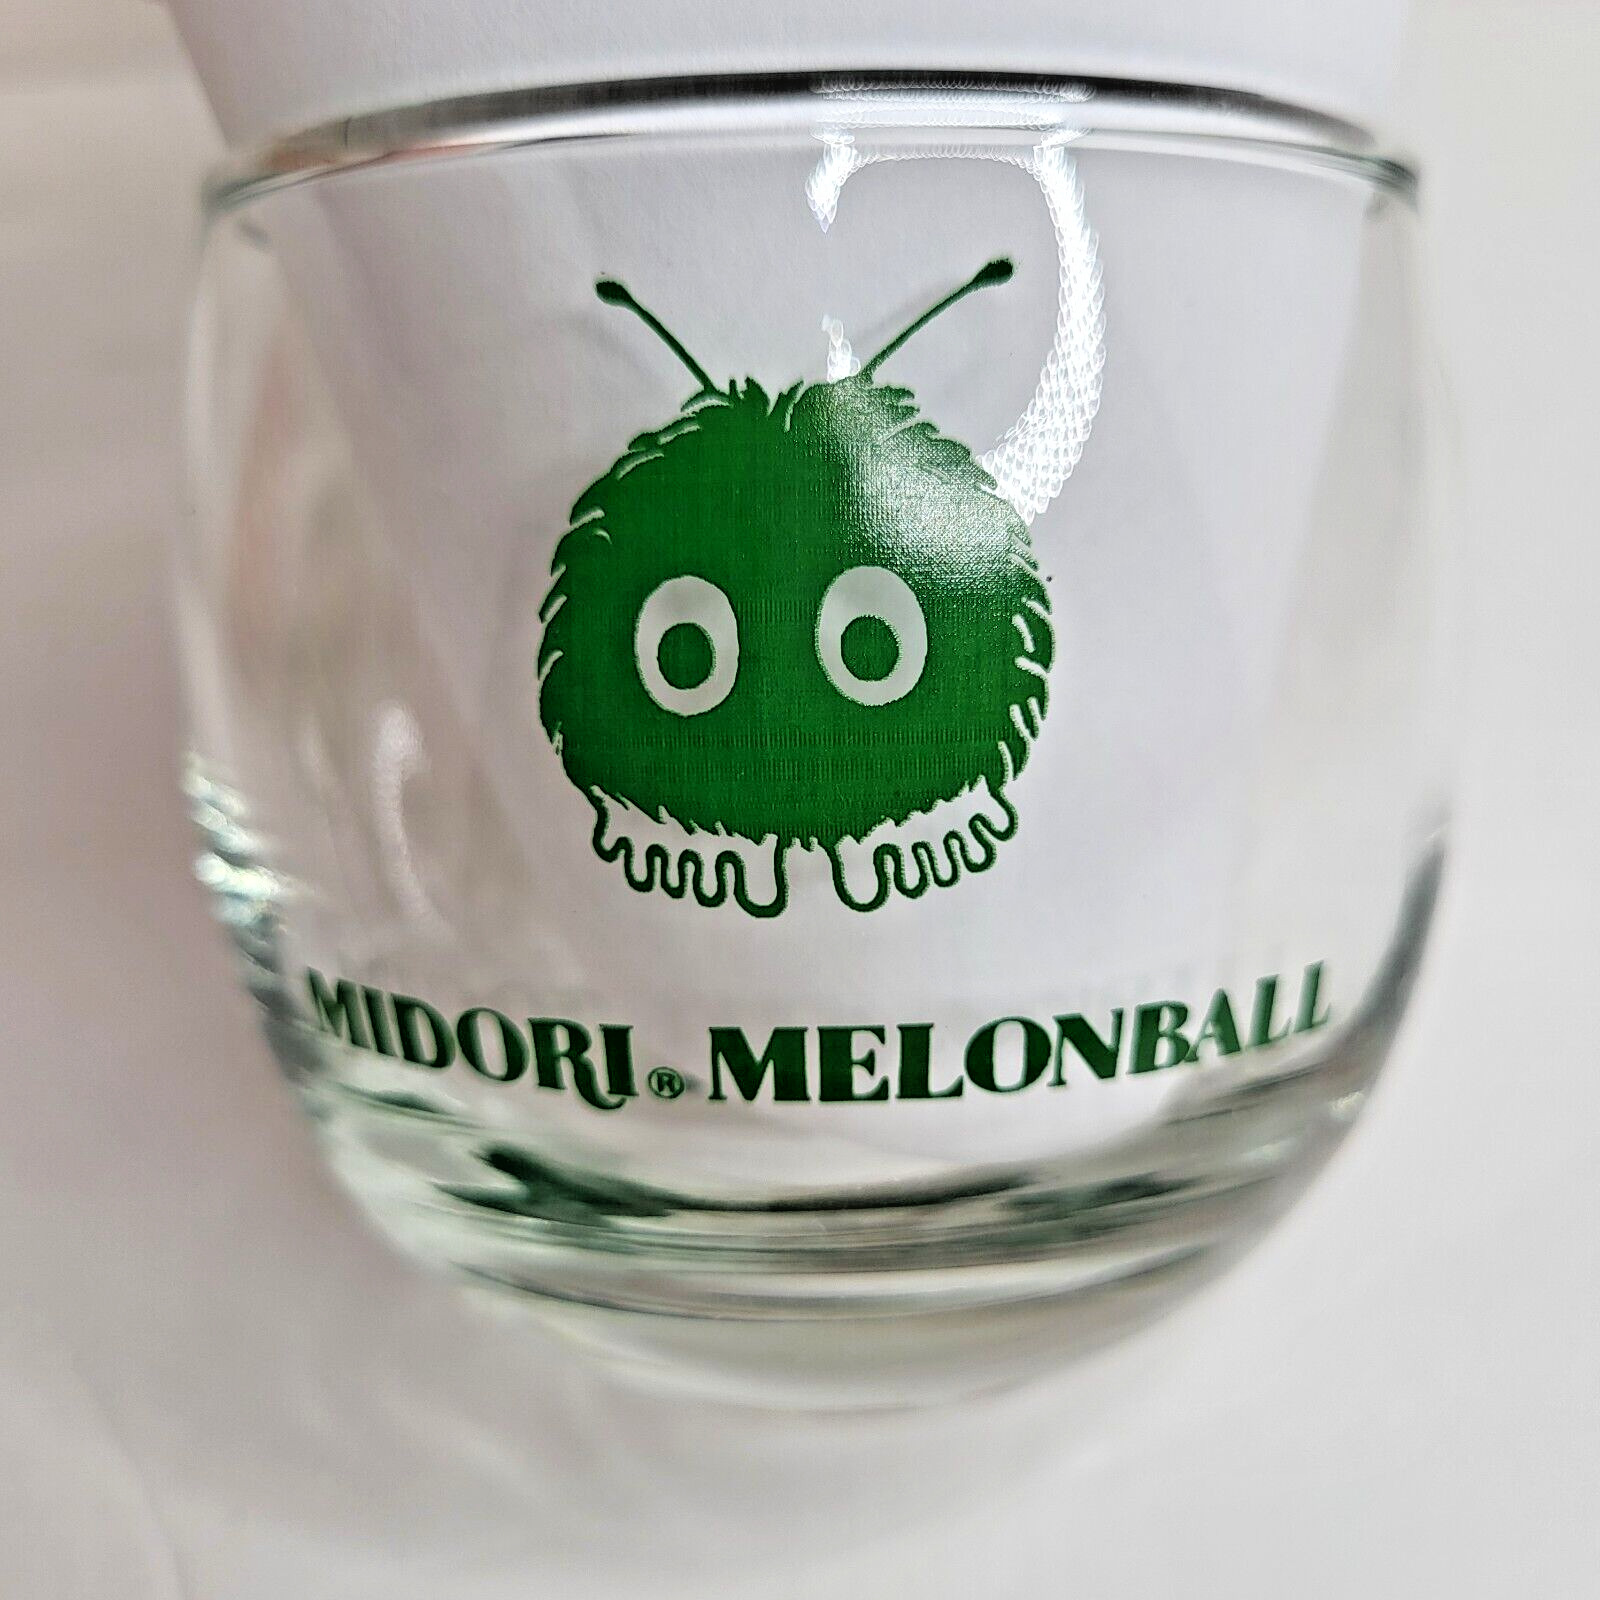 Midori Melon Ball Cocktail Recipe Drink Glass 10oz Vintage